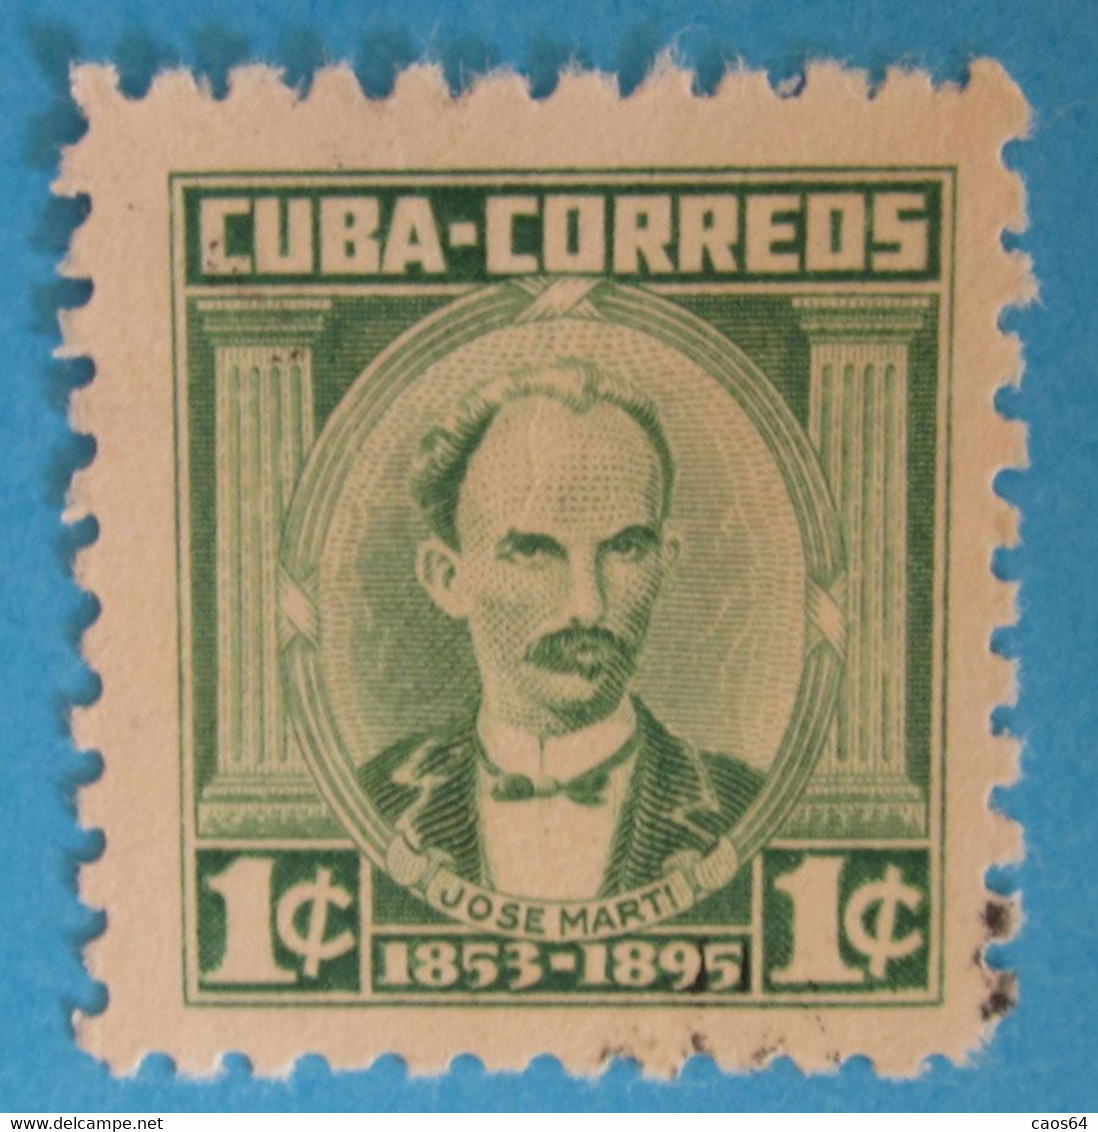 1954 CUBA  Uomini José Marti (1853-1895) - 1c Usato - Gebraucht